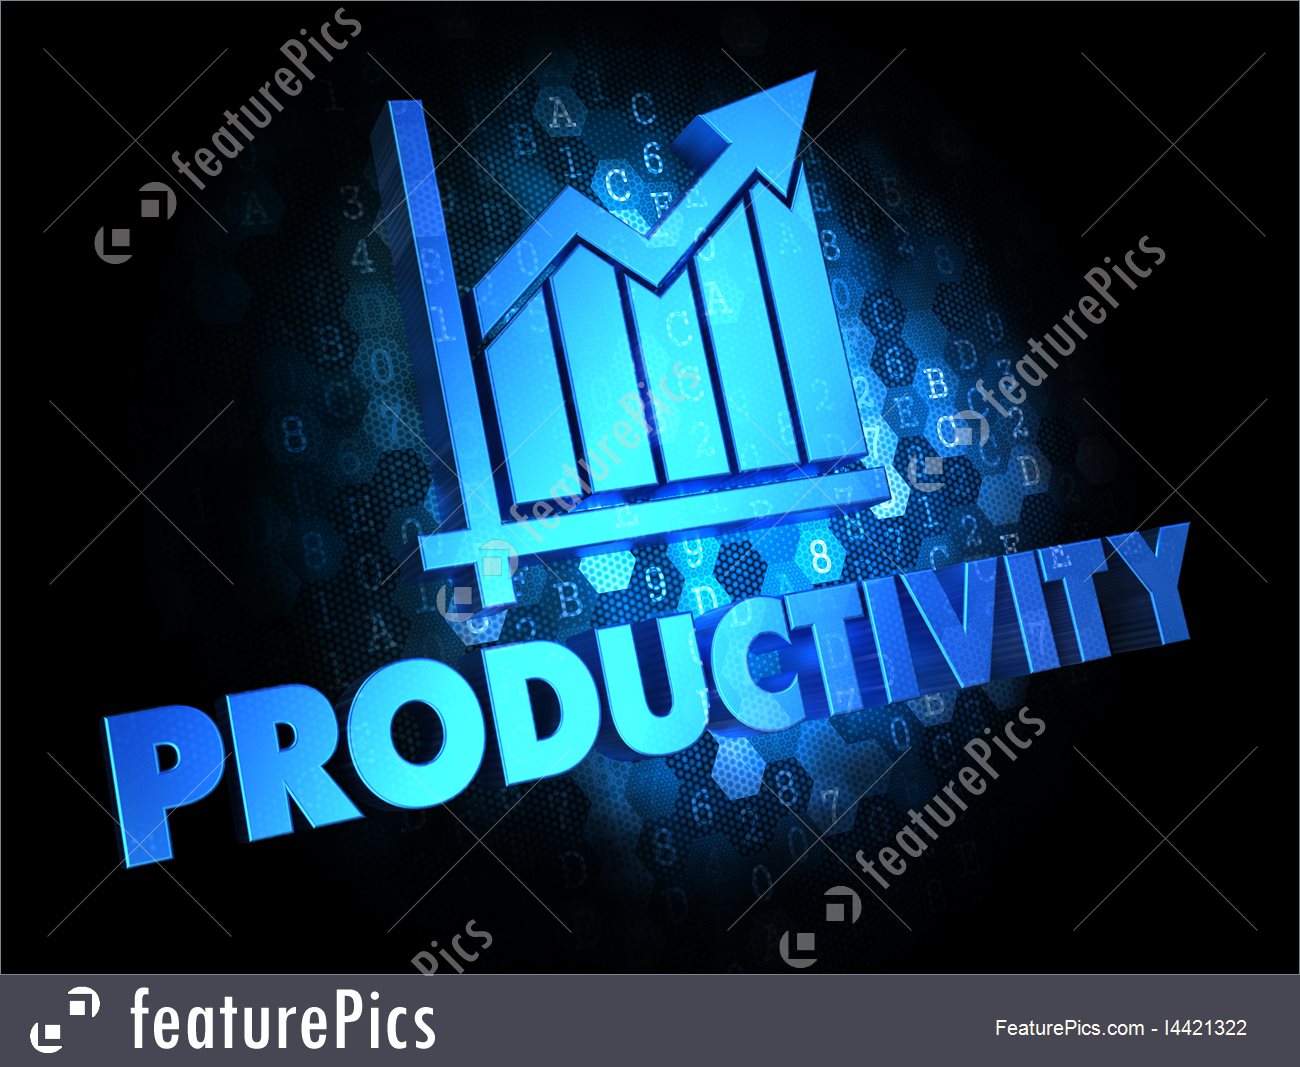 Productivity On Dark Digital Background